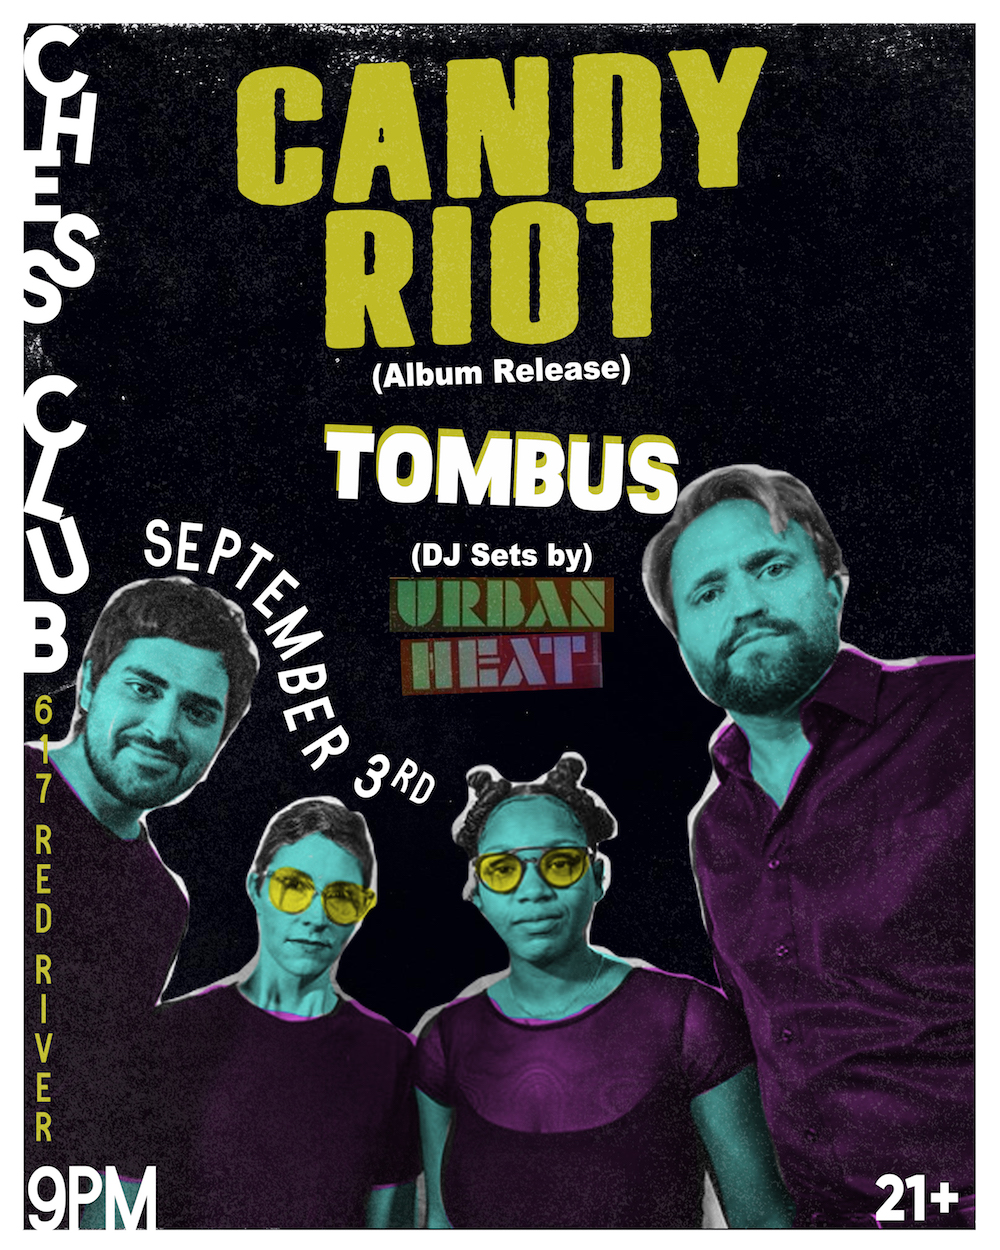 Candy Riot Album Release // Tombus // Urban Heat DJ Sets